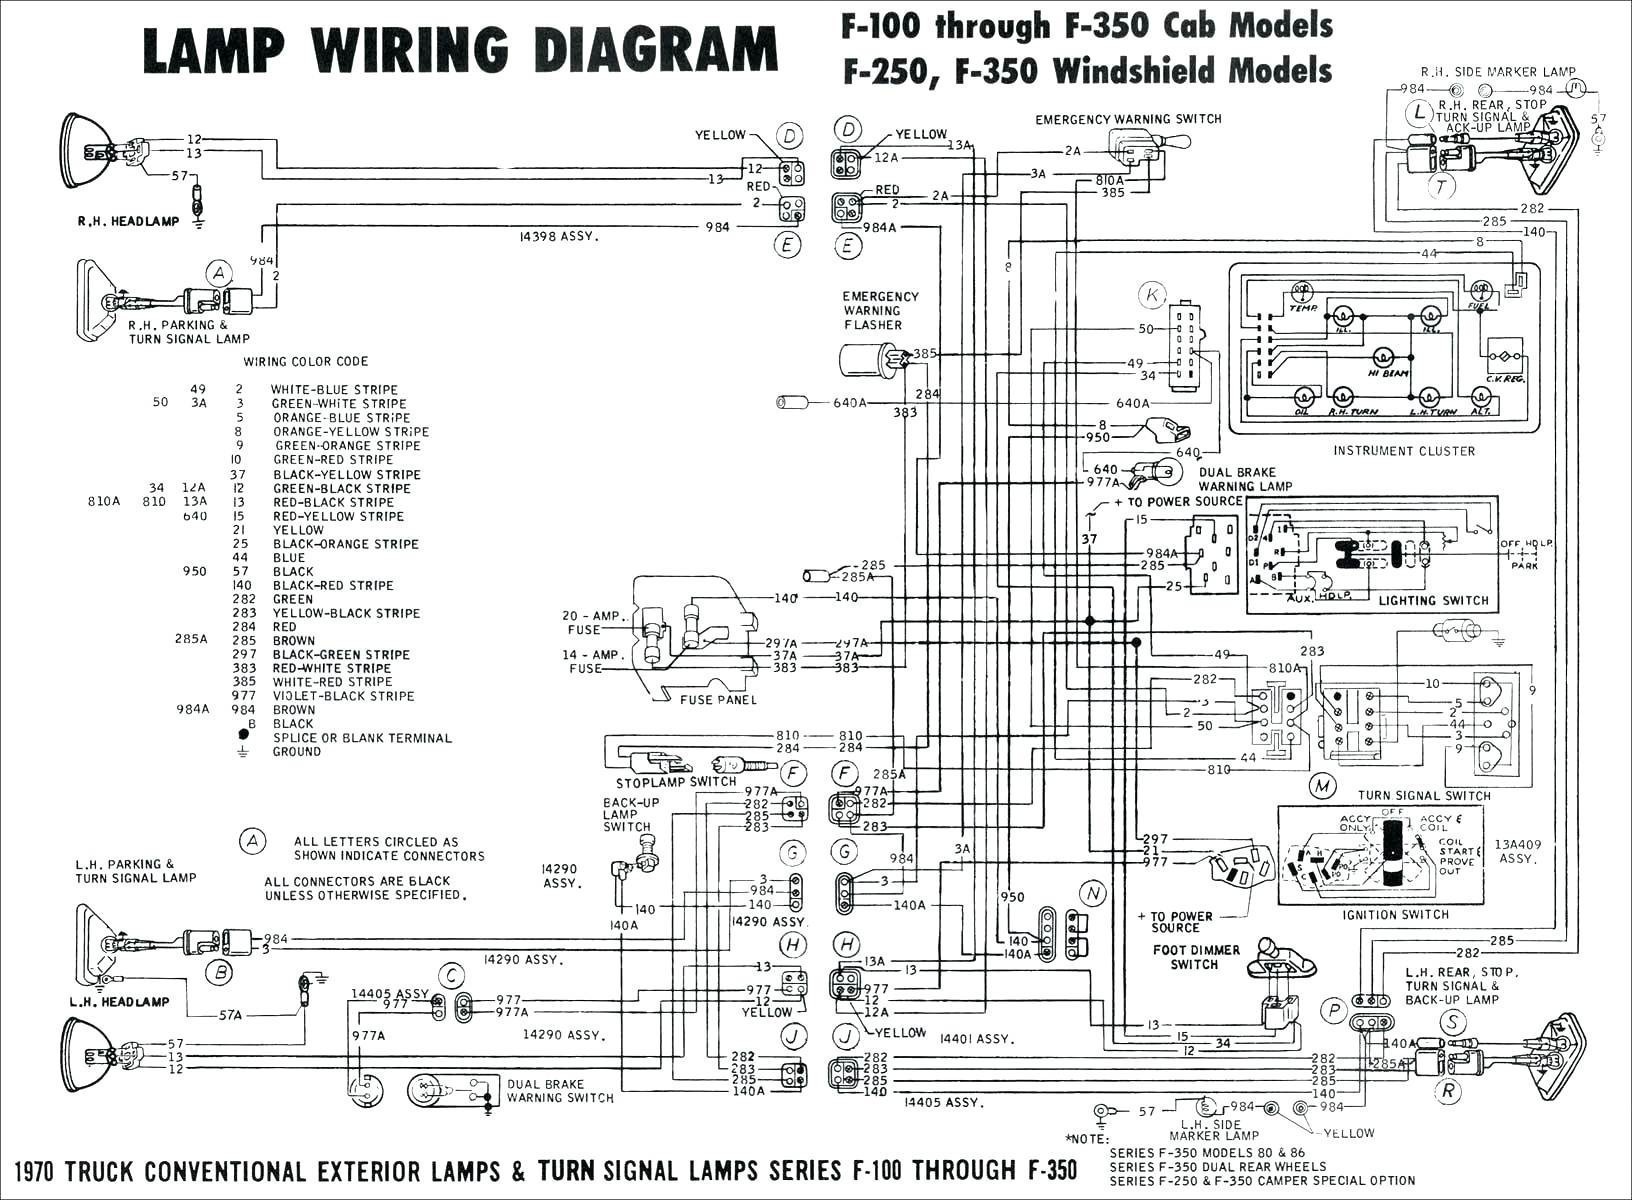 Vw Golf V5 Engine Diagram Wiring Diagram Vw Golf Mk4 Archives Elgrifo Valid Wiring Of Vw Golf V5 Engine Diagram